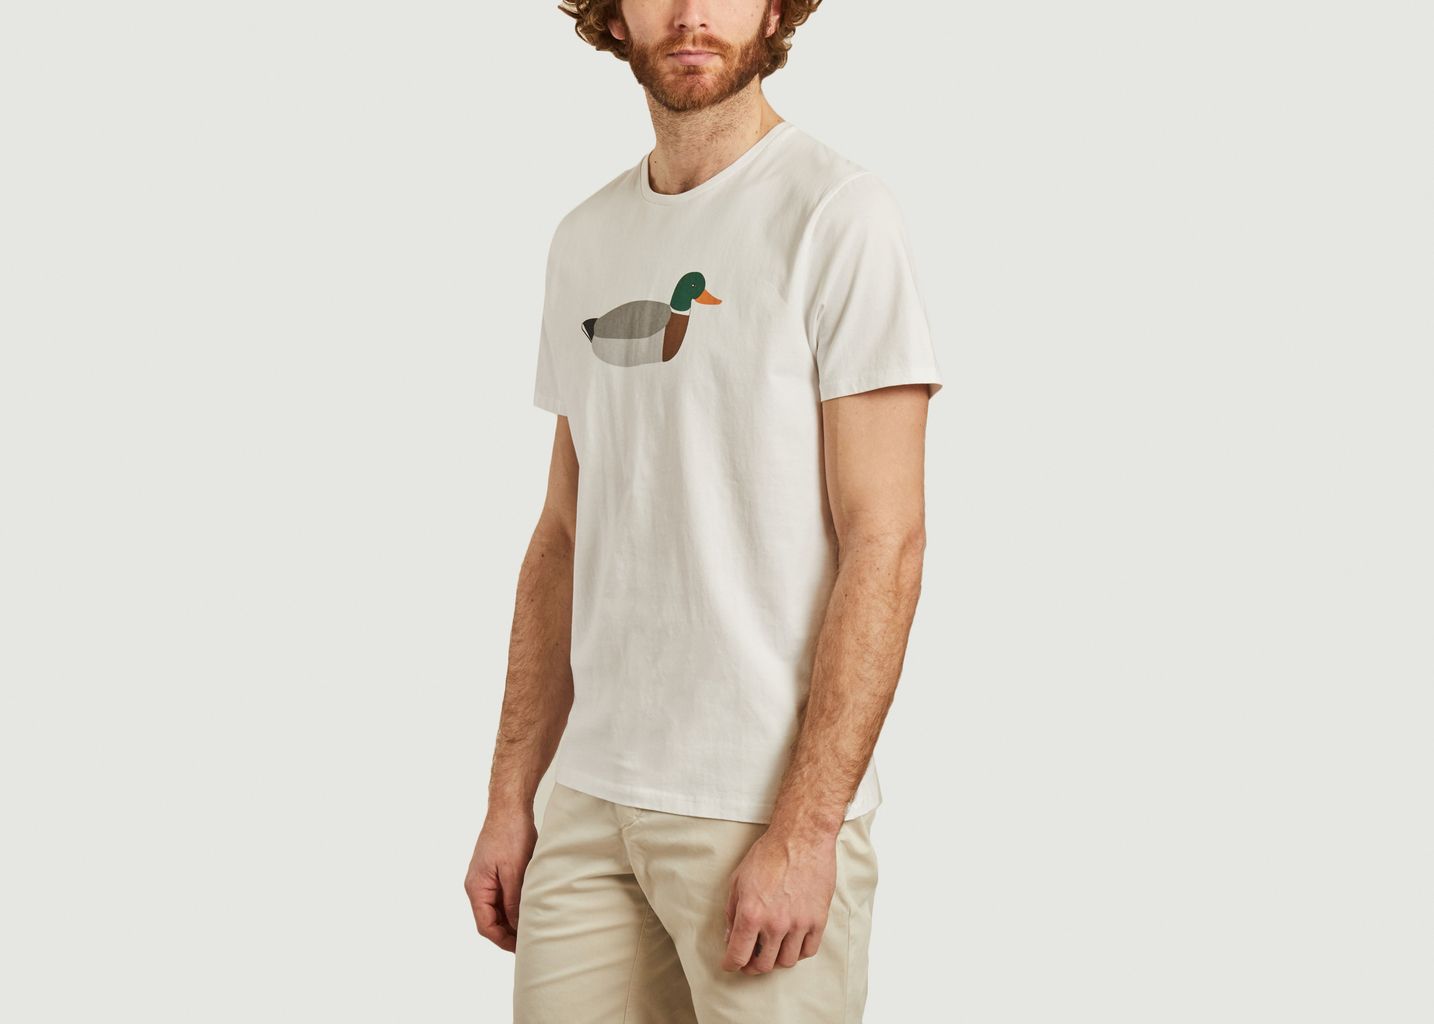 T-shirt Chasse aux canards - Edmmond Studios